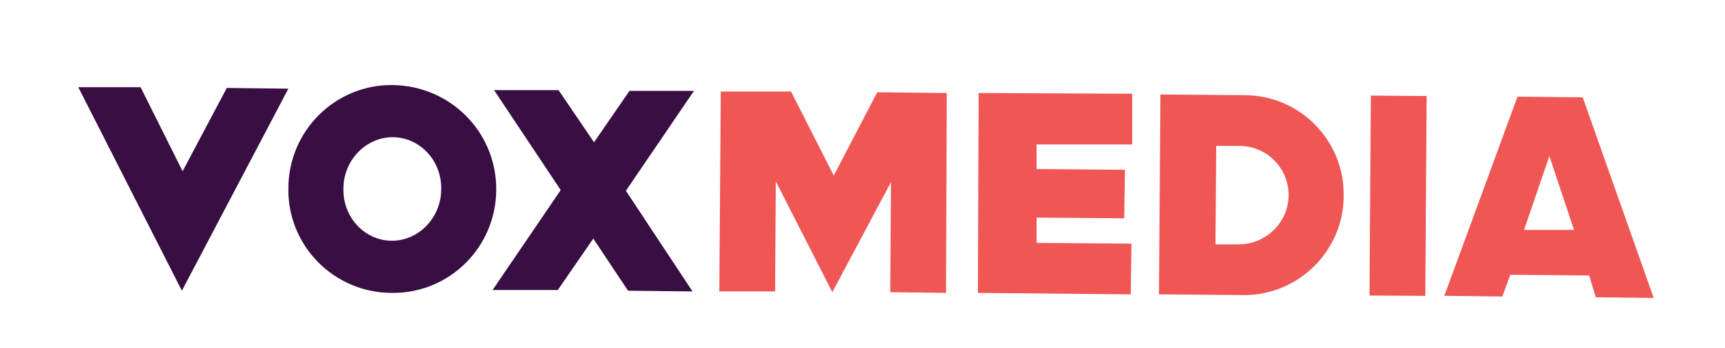 Vox_Media-Logo